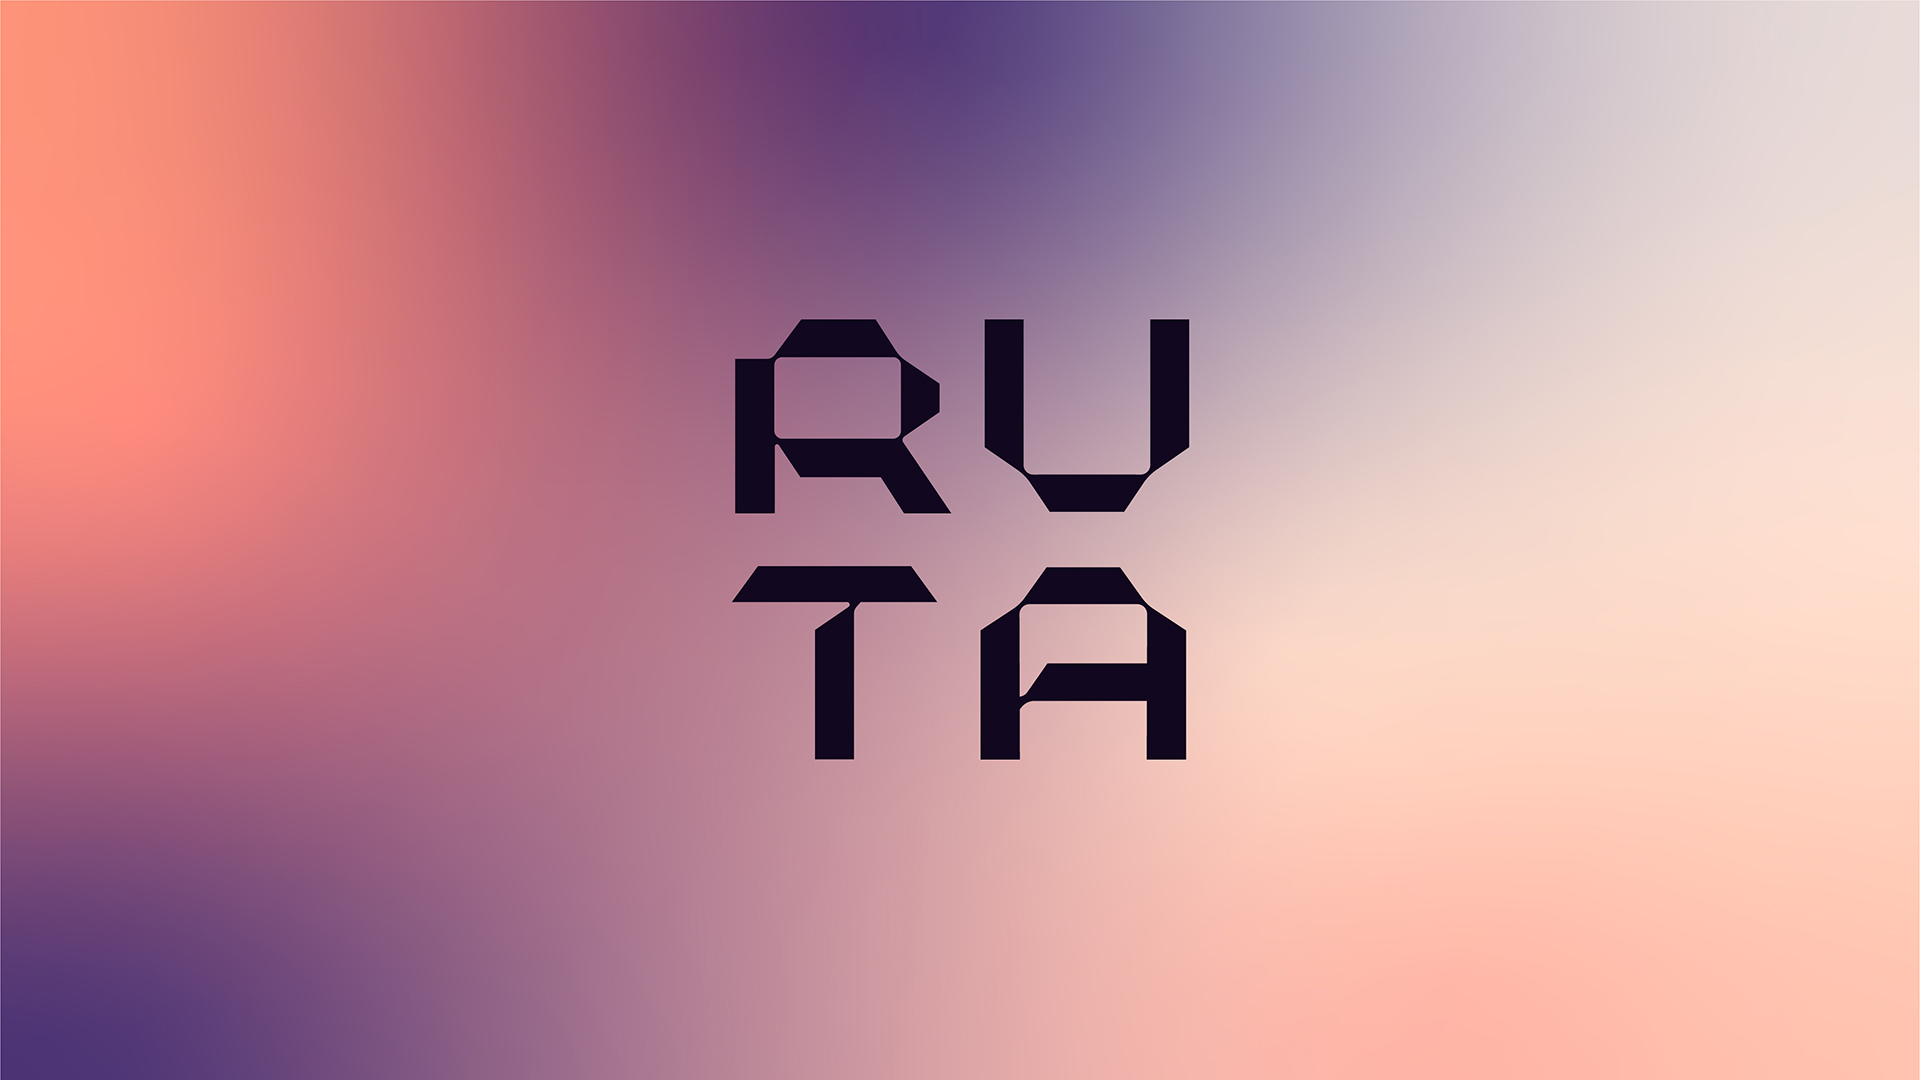 RUTA美妆包装设计